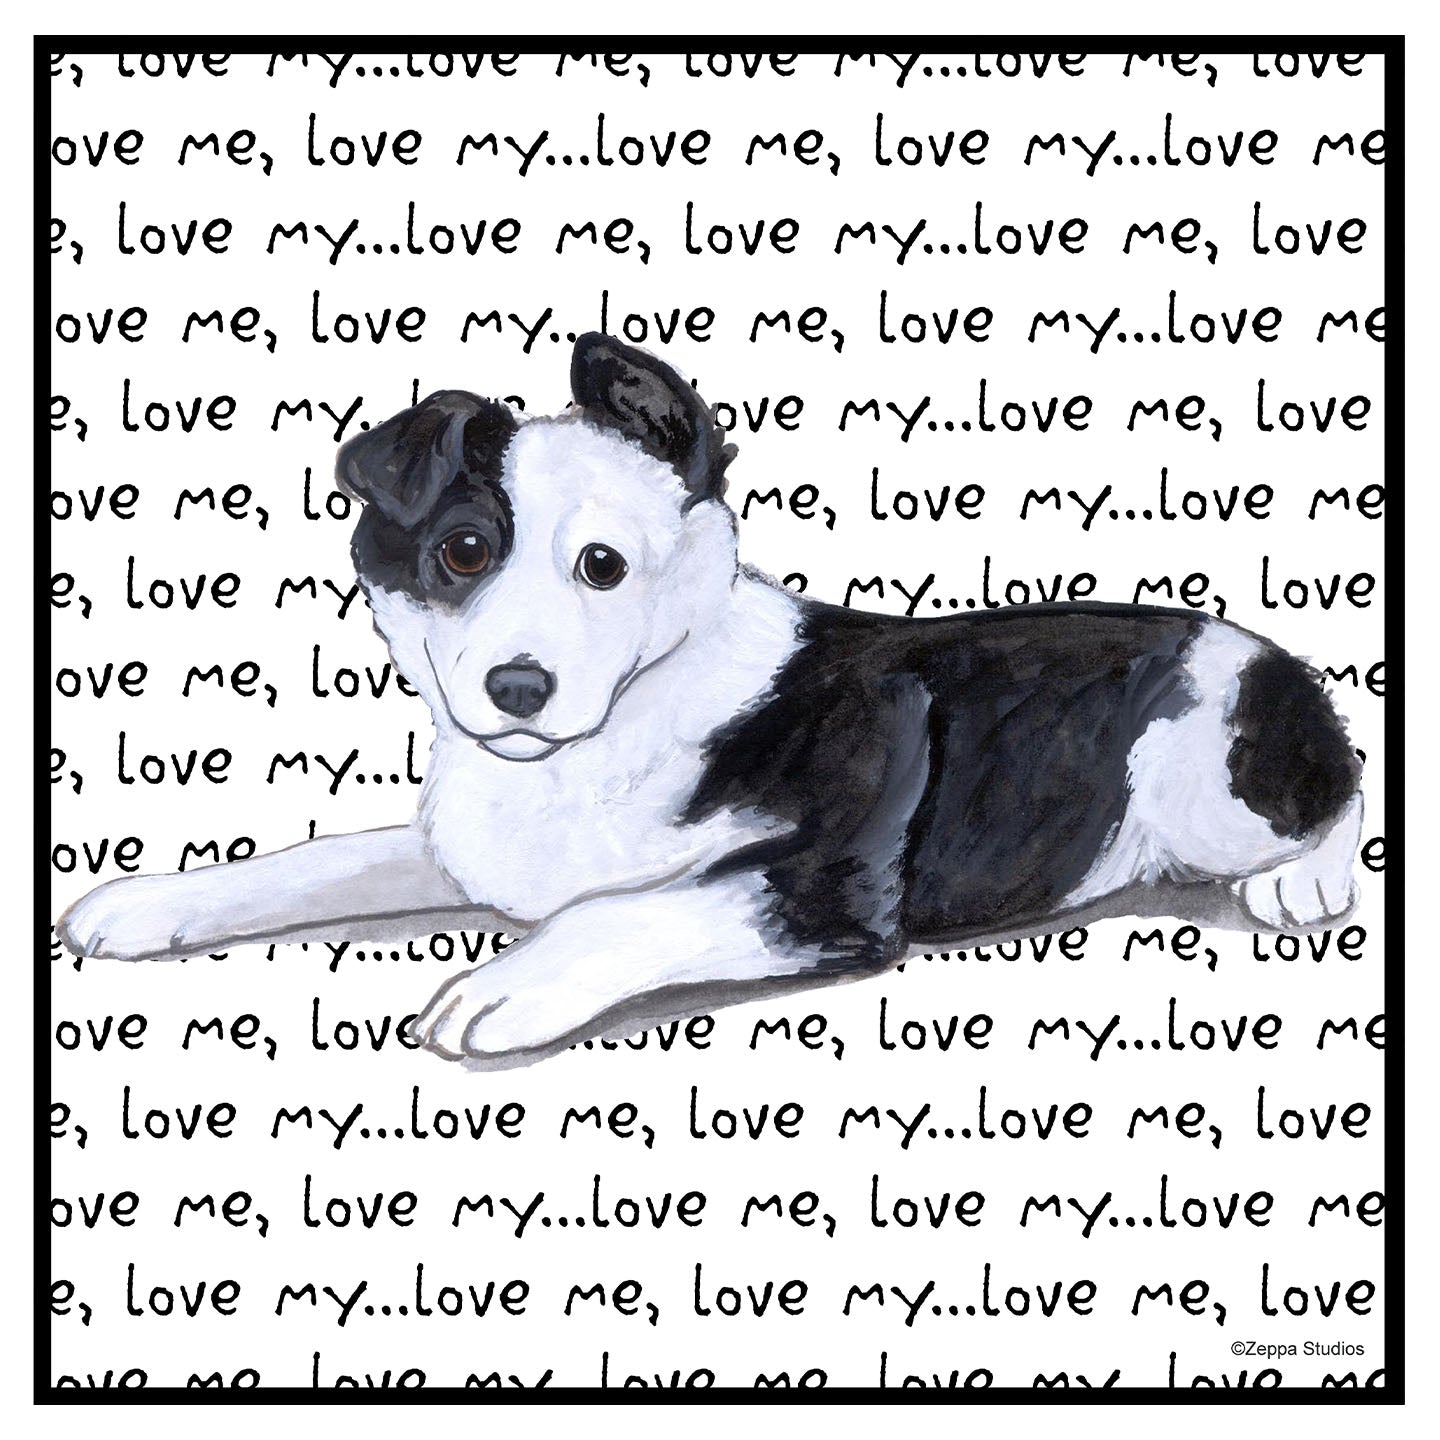 Border Collie Puppy Love Text - Women's V-Neck Long Sleeve T-Shirt